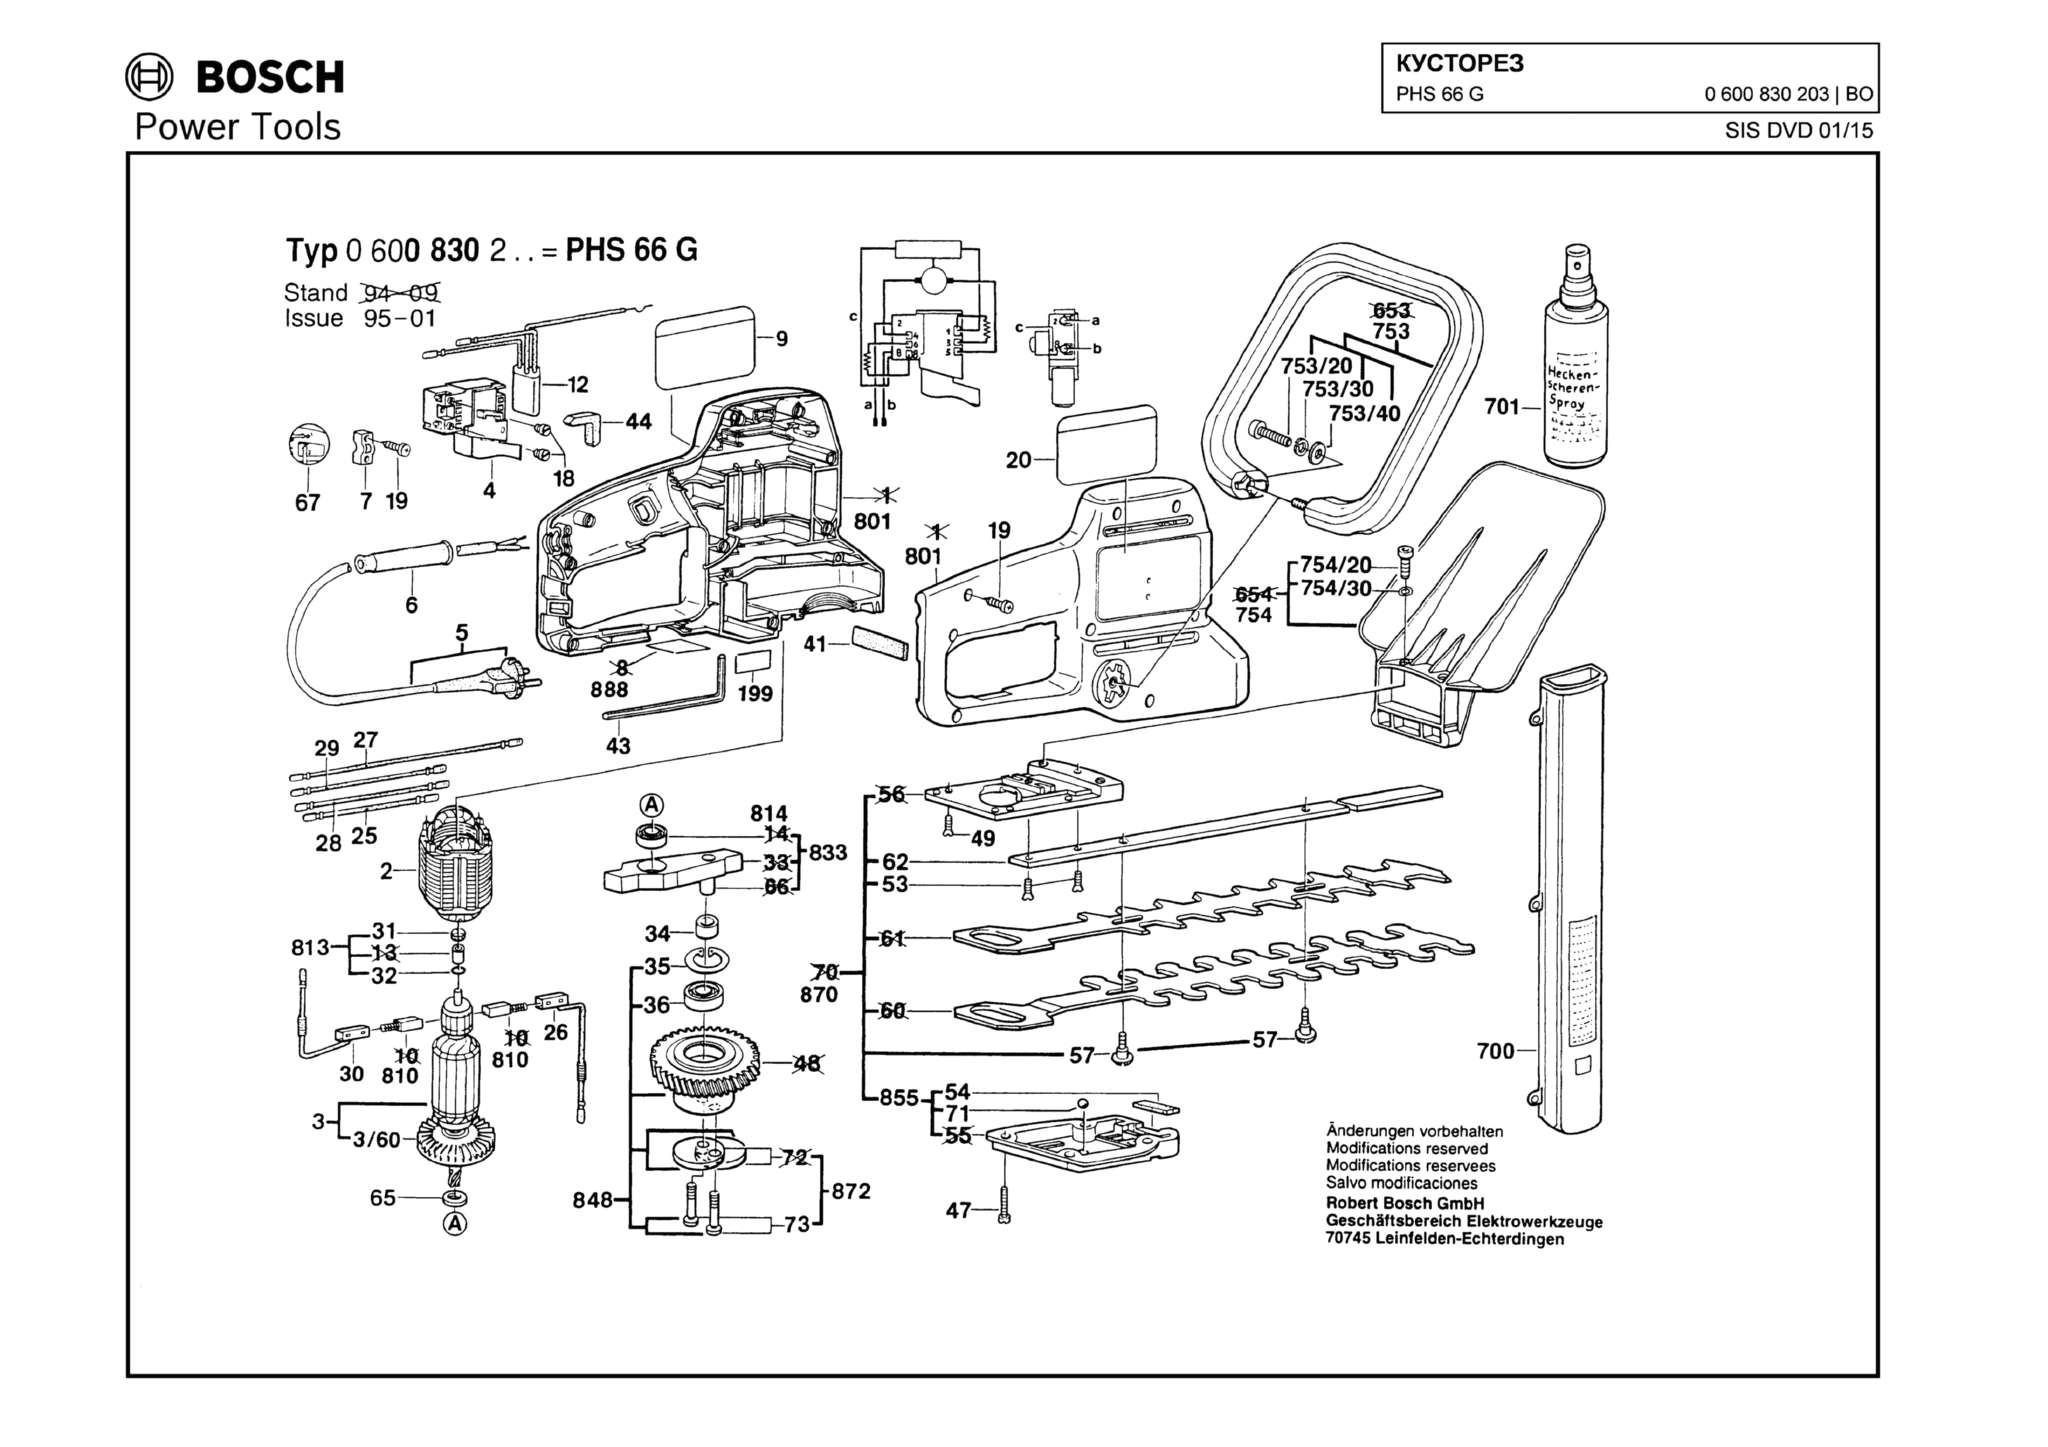 Запчасти, схема и деталировка Bosch PHS 66 G (ТИП 0600830203)